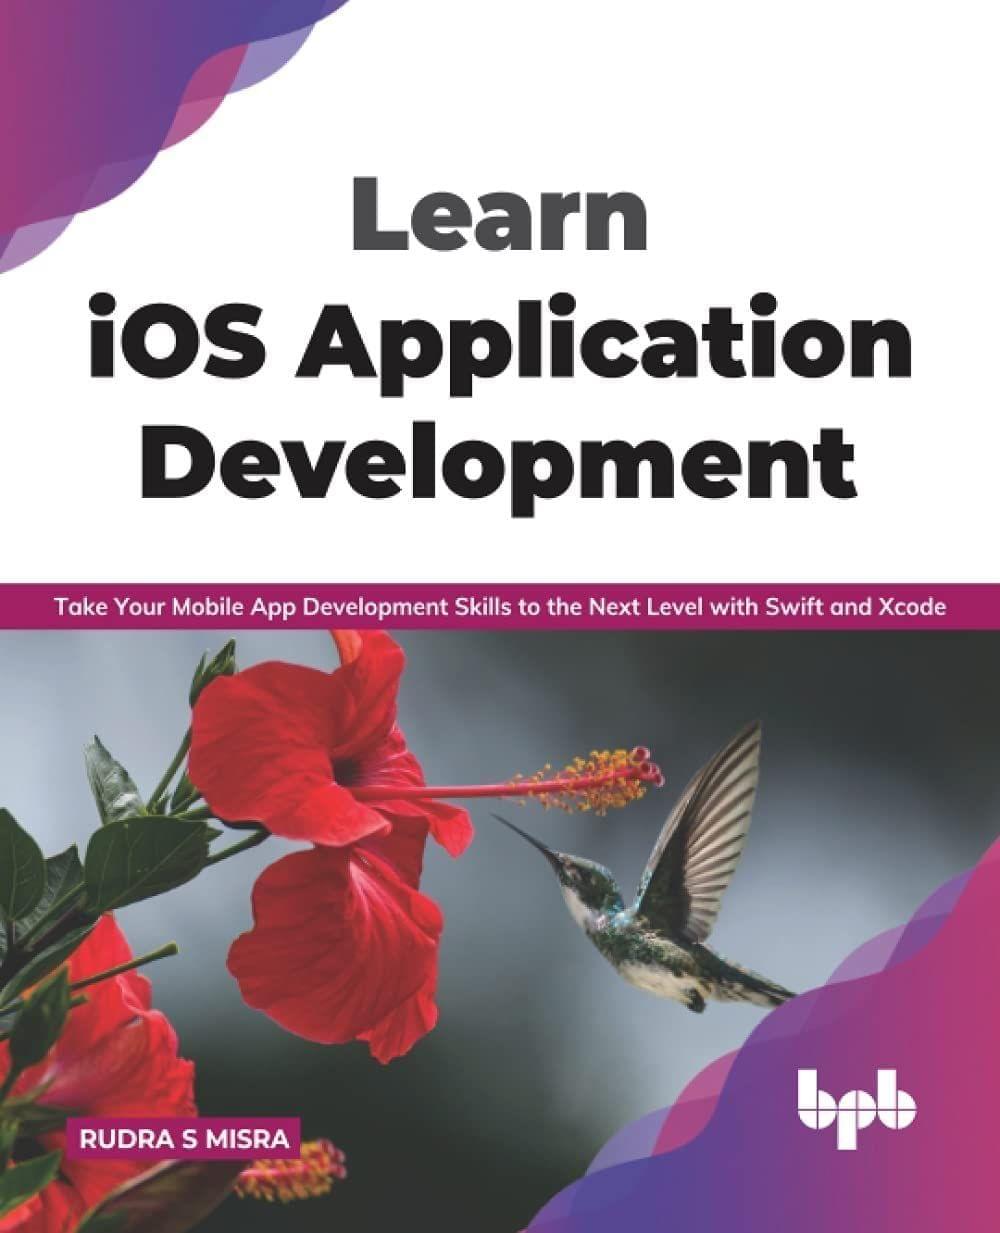 Learn iOS Application Development [Paperback] Misra, Rudra S.